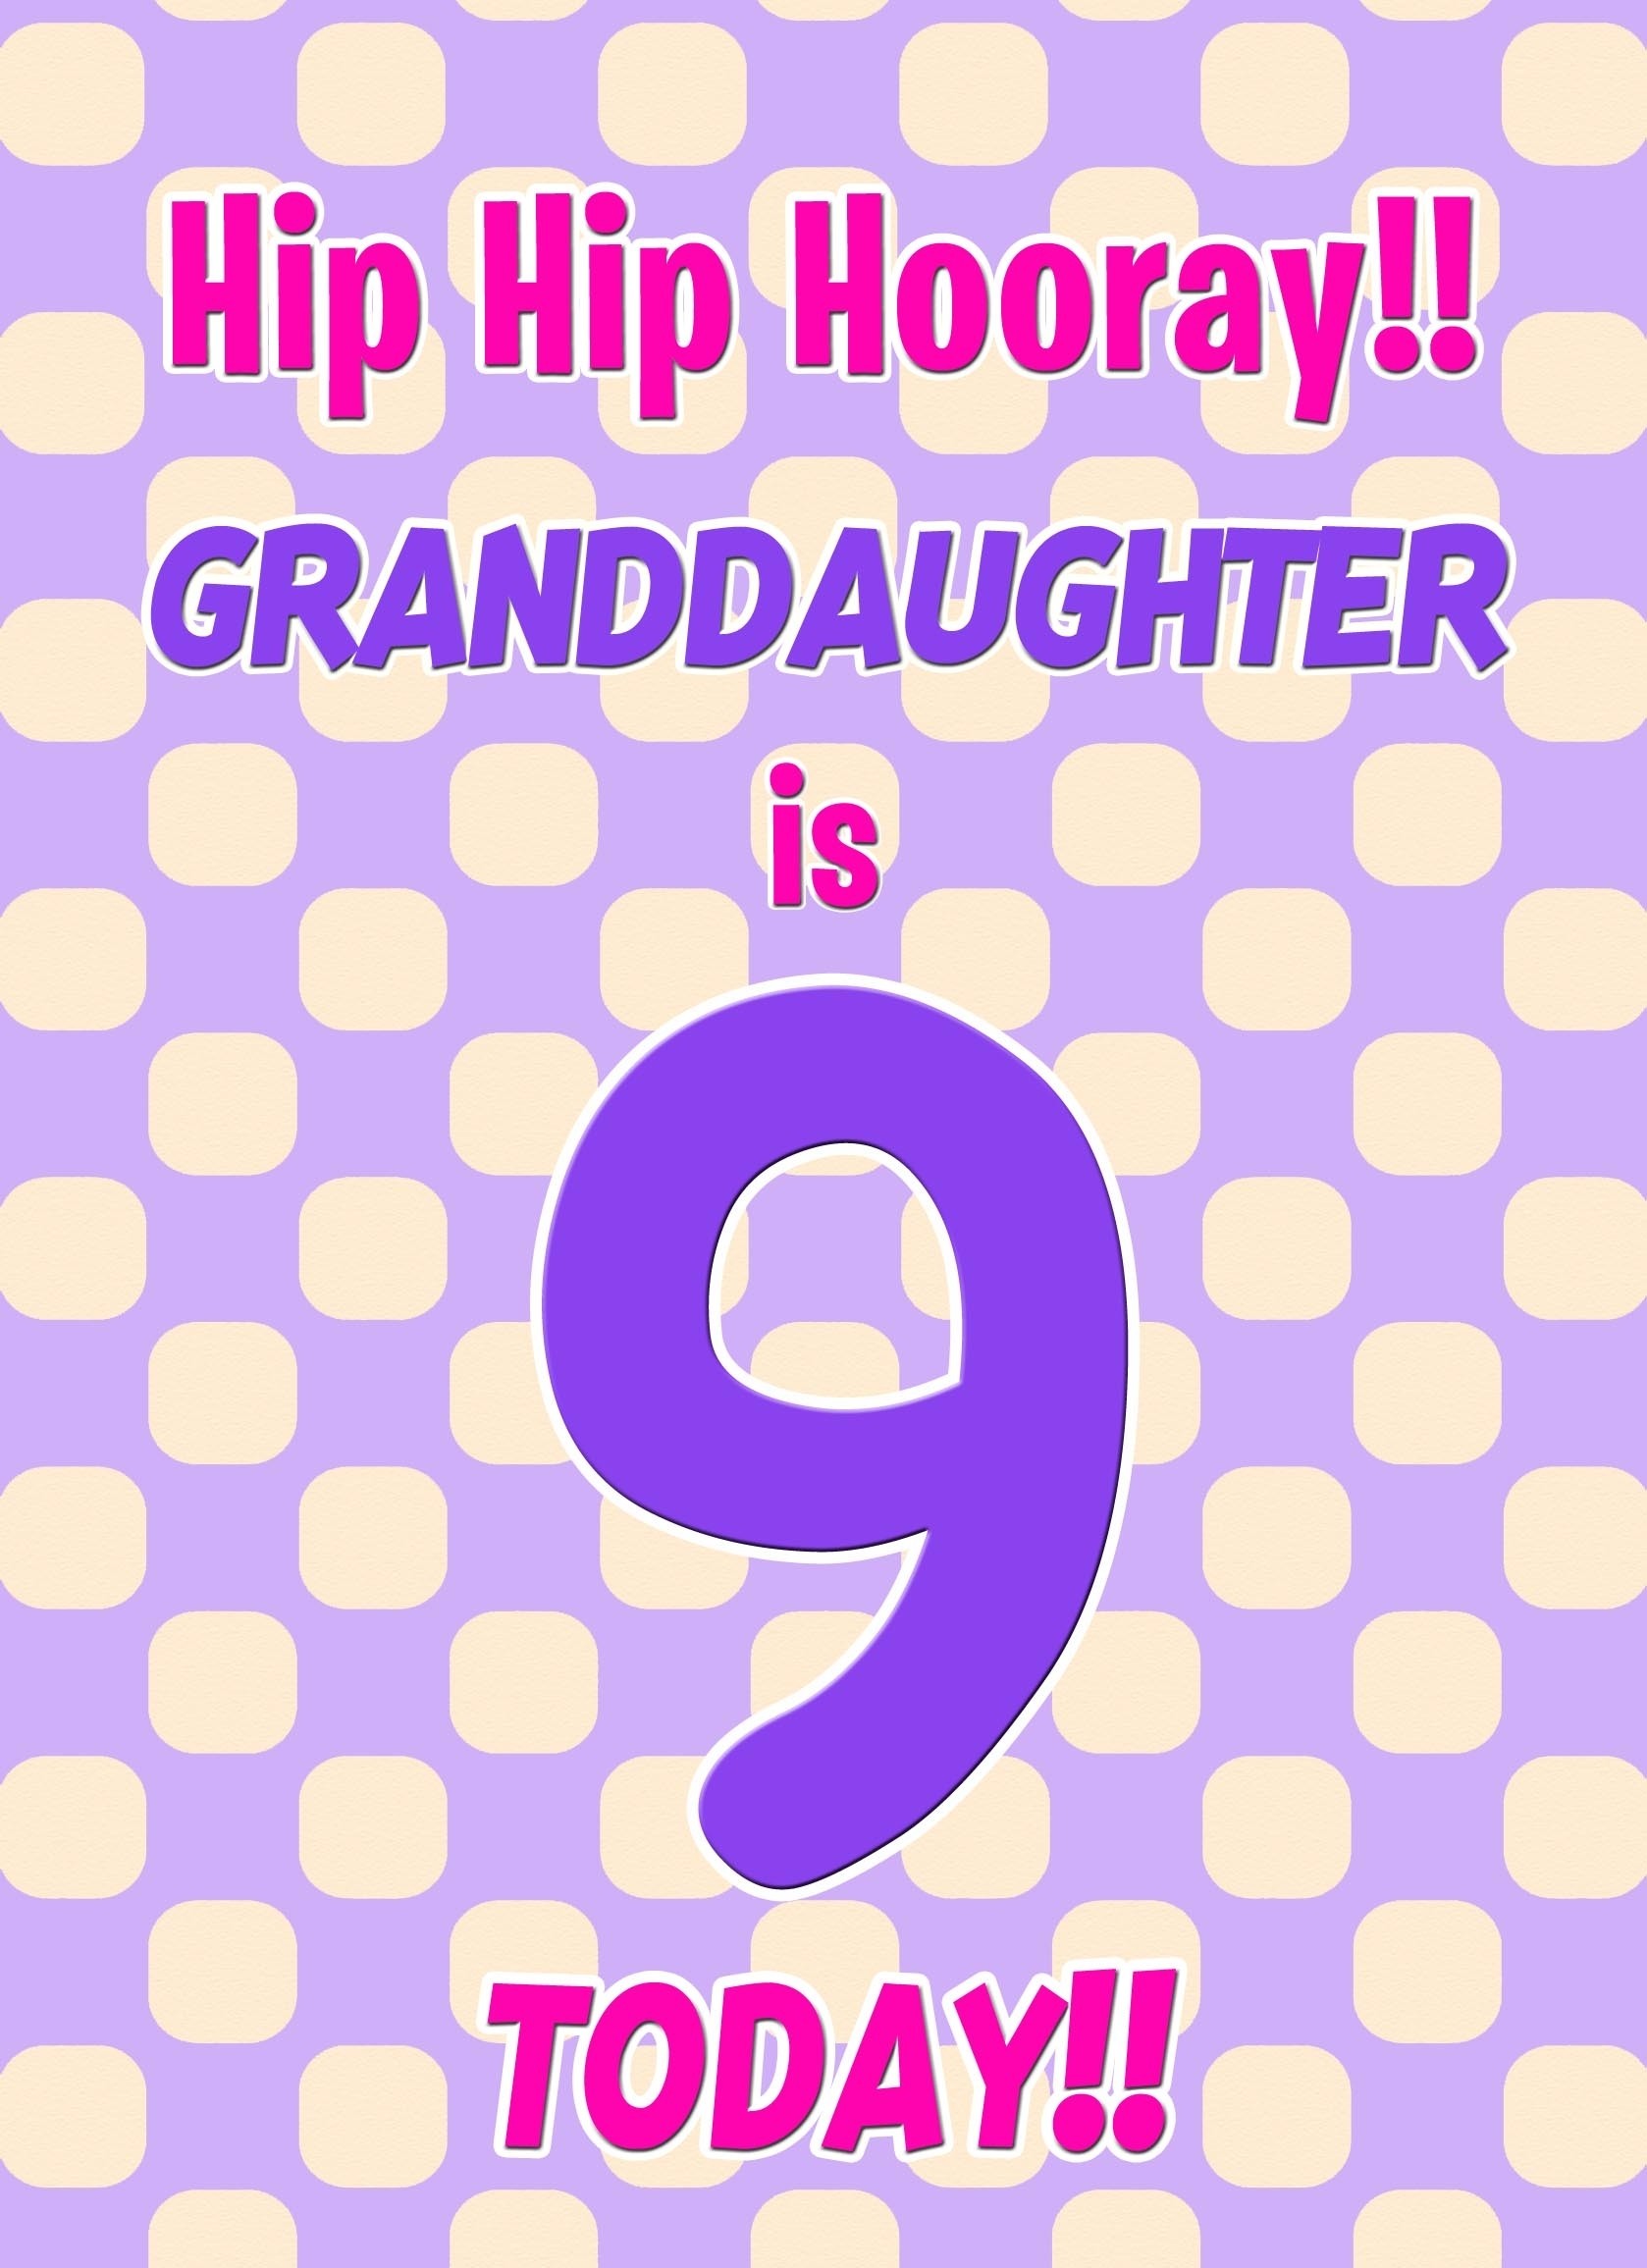 Granddaughter 9th Birthday Card (Purple Spots)